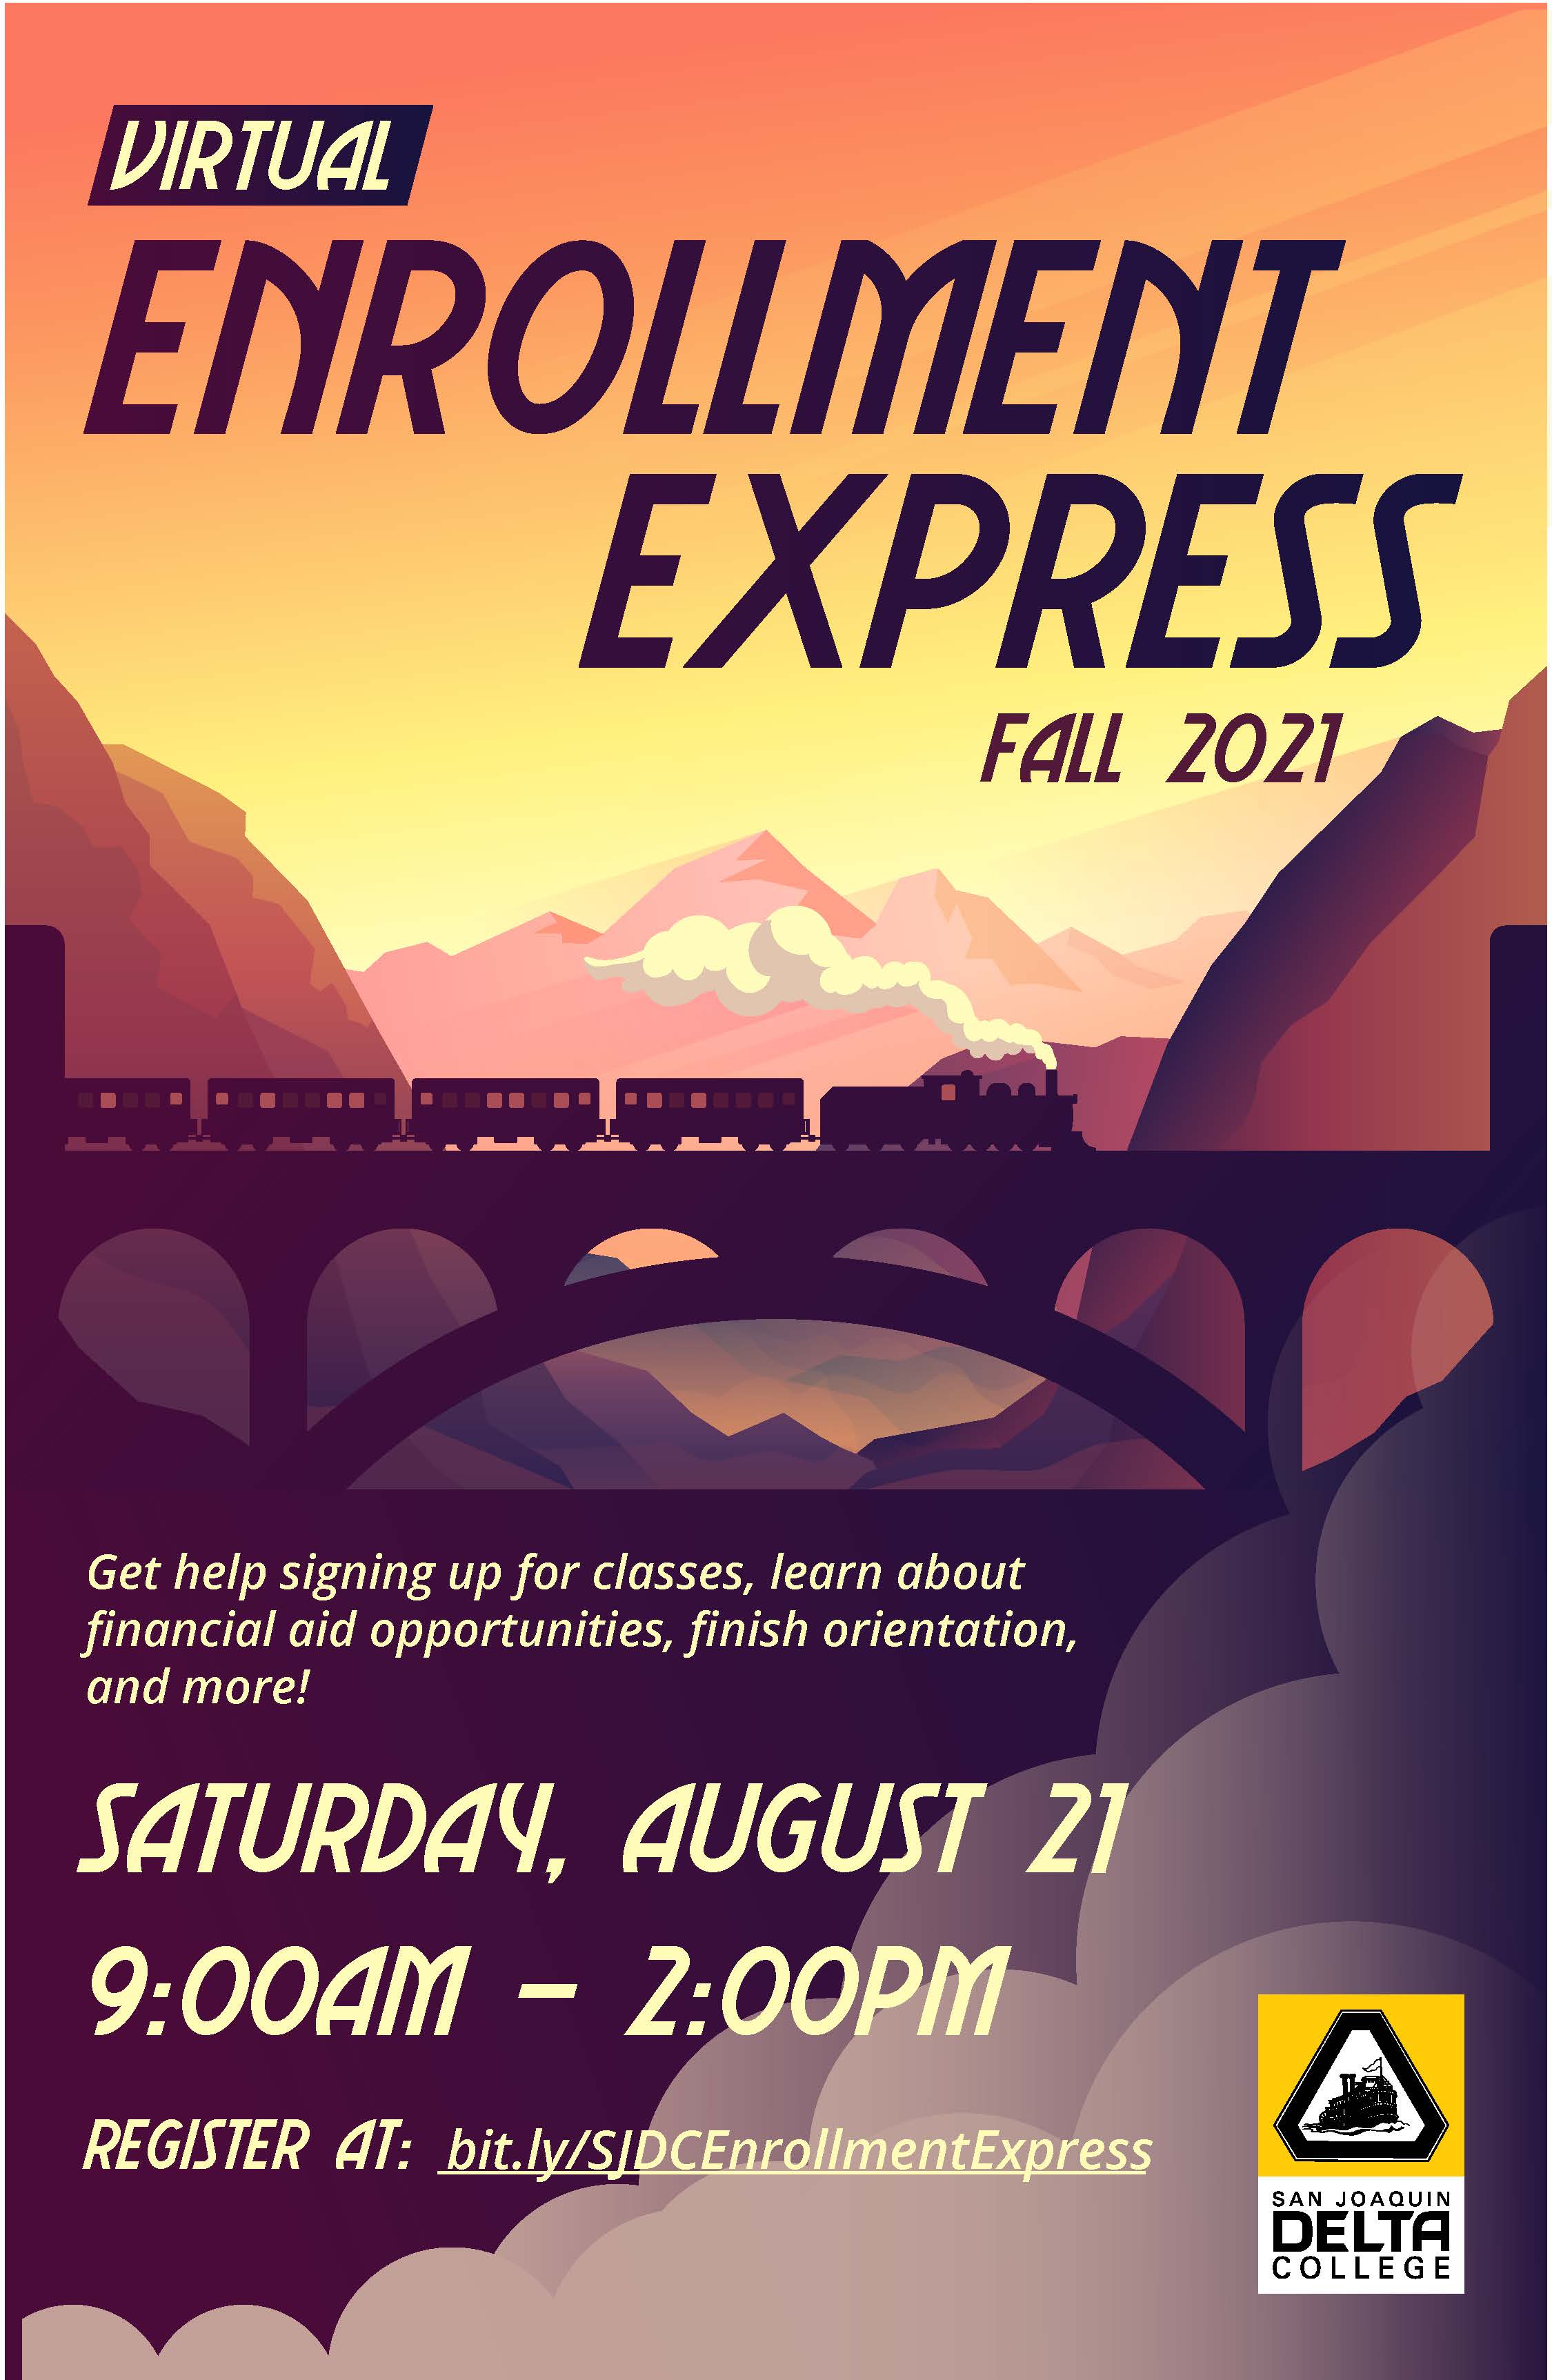 Enrollment Express returns (virtually) Aug. 21